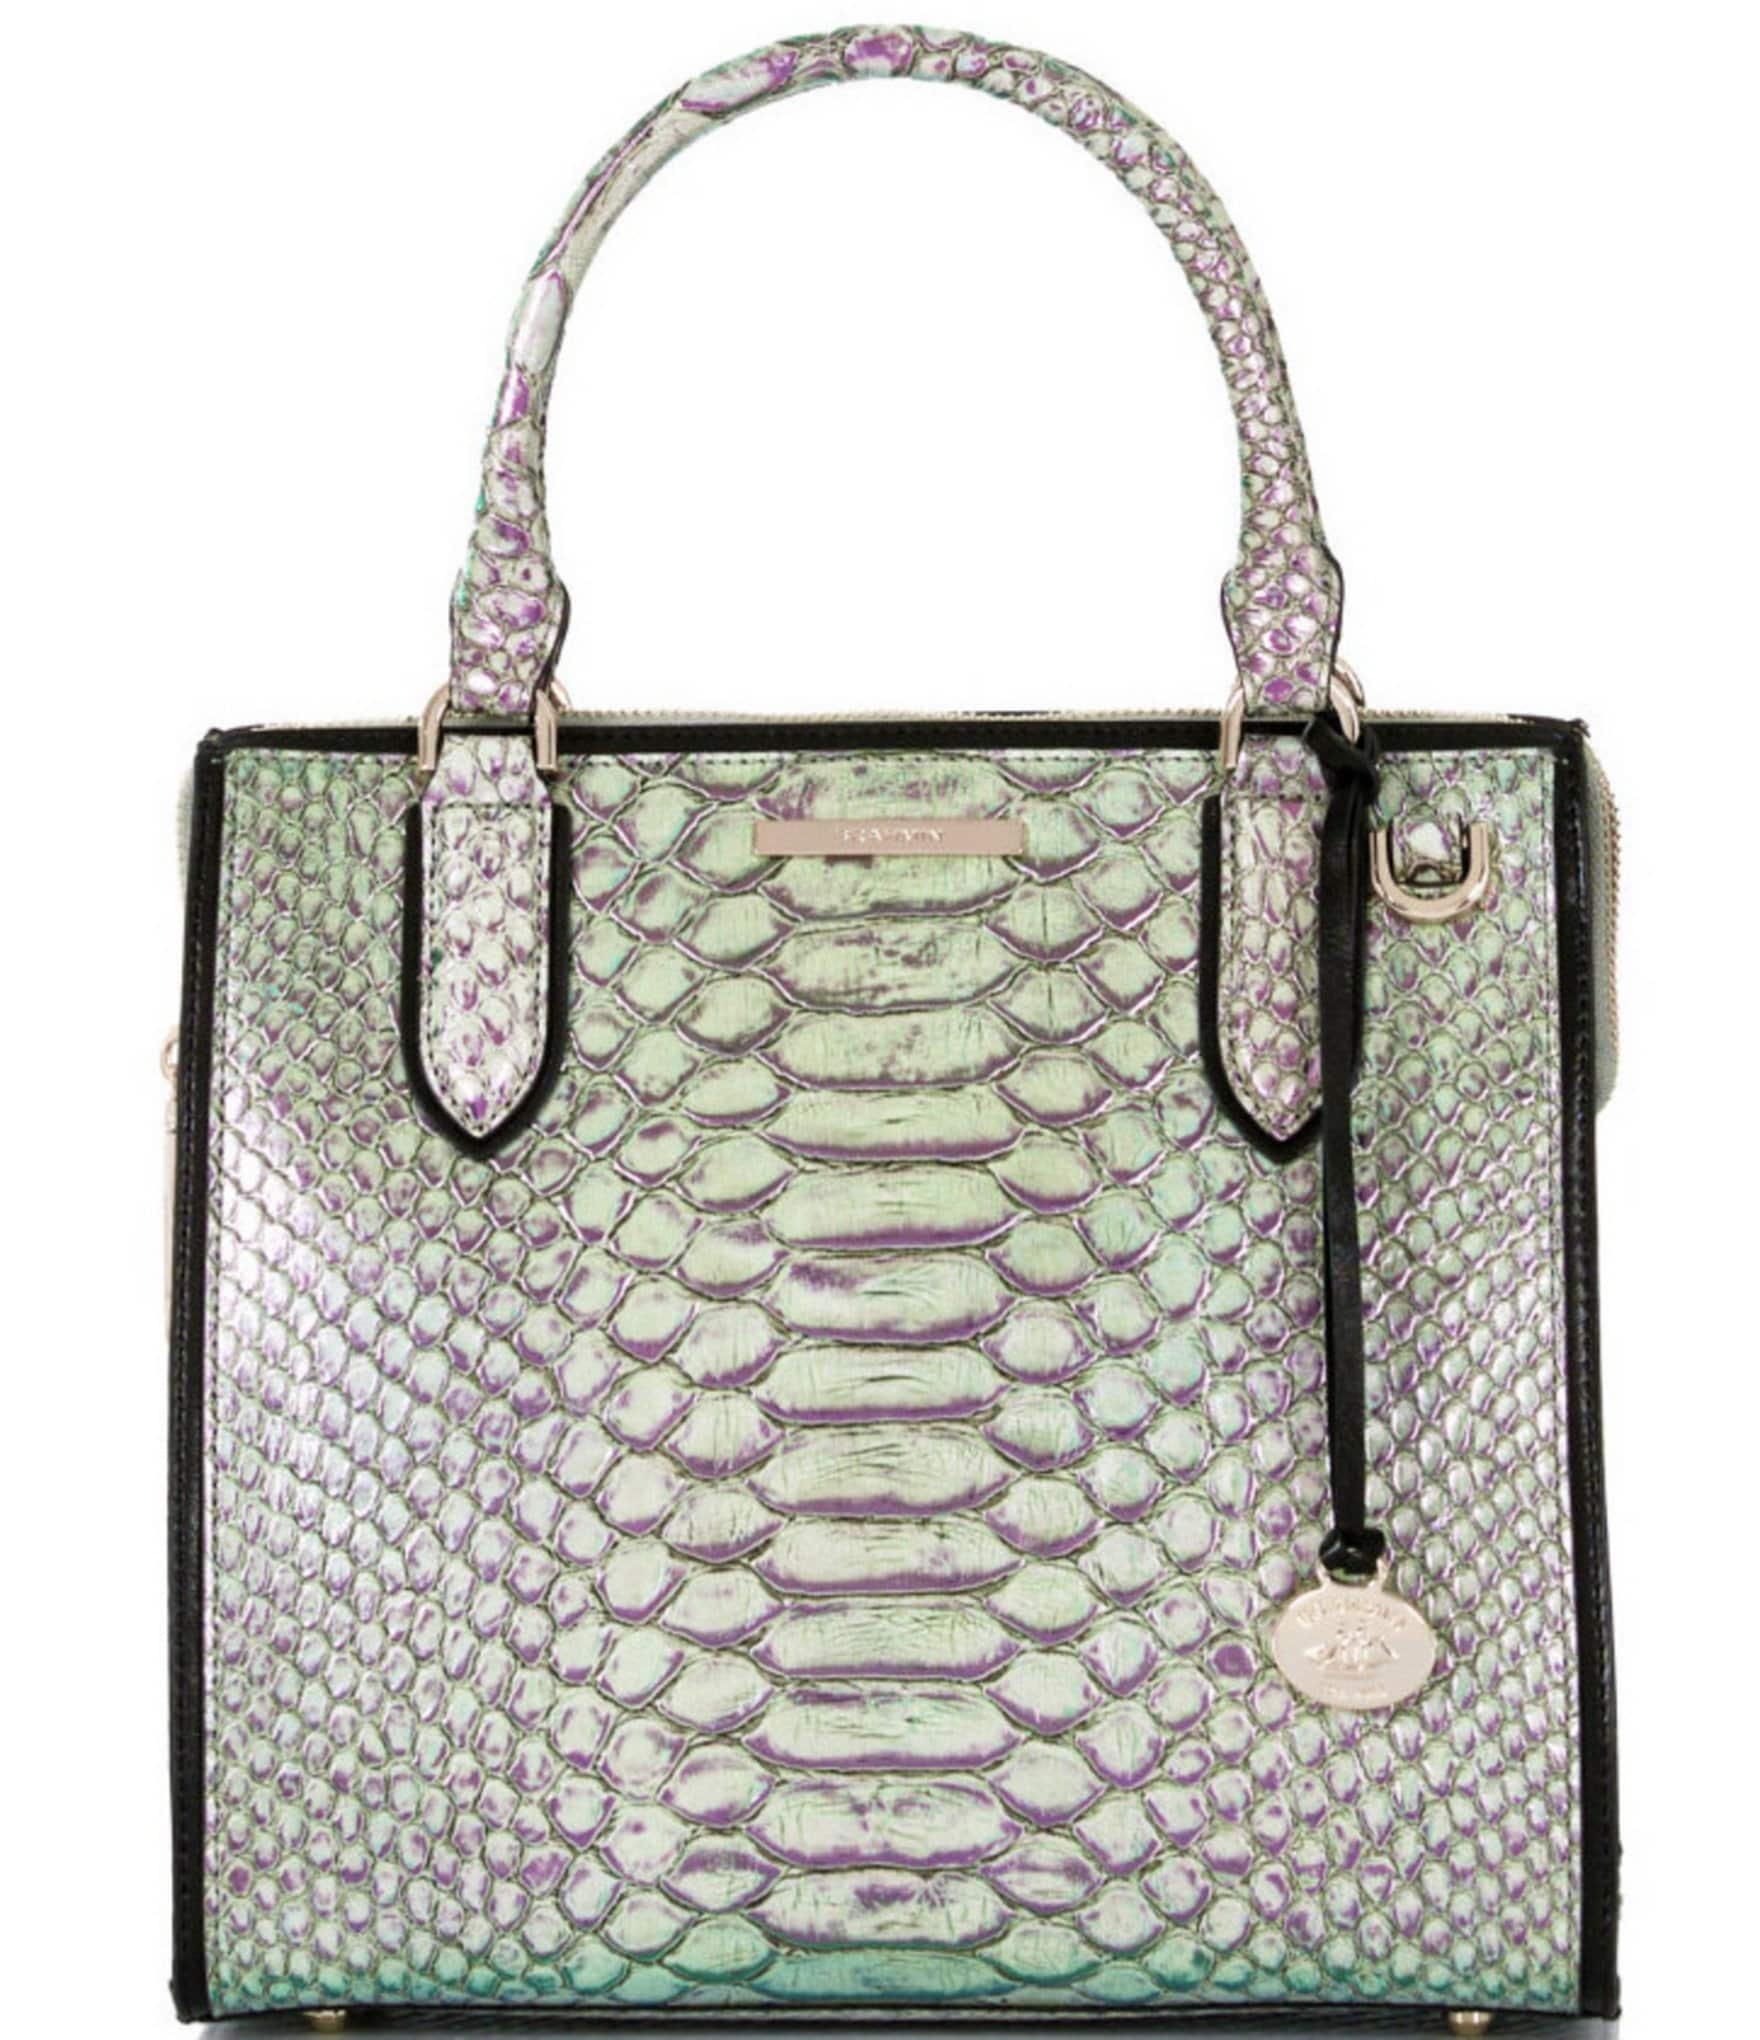 Brahmin Windermere Small Caroline Satchel (Silver Lining) Handbags